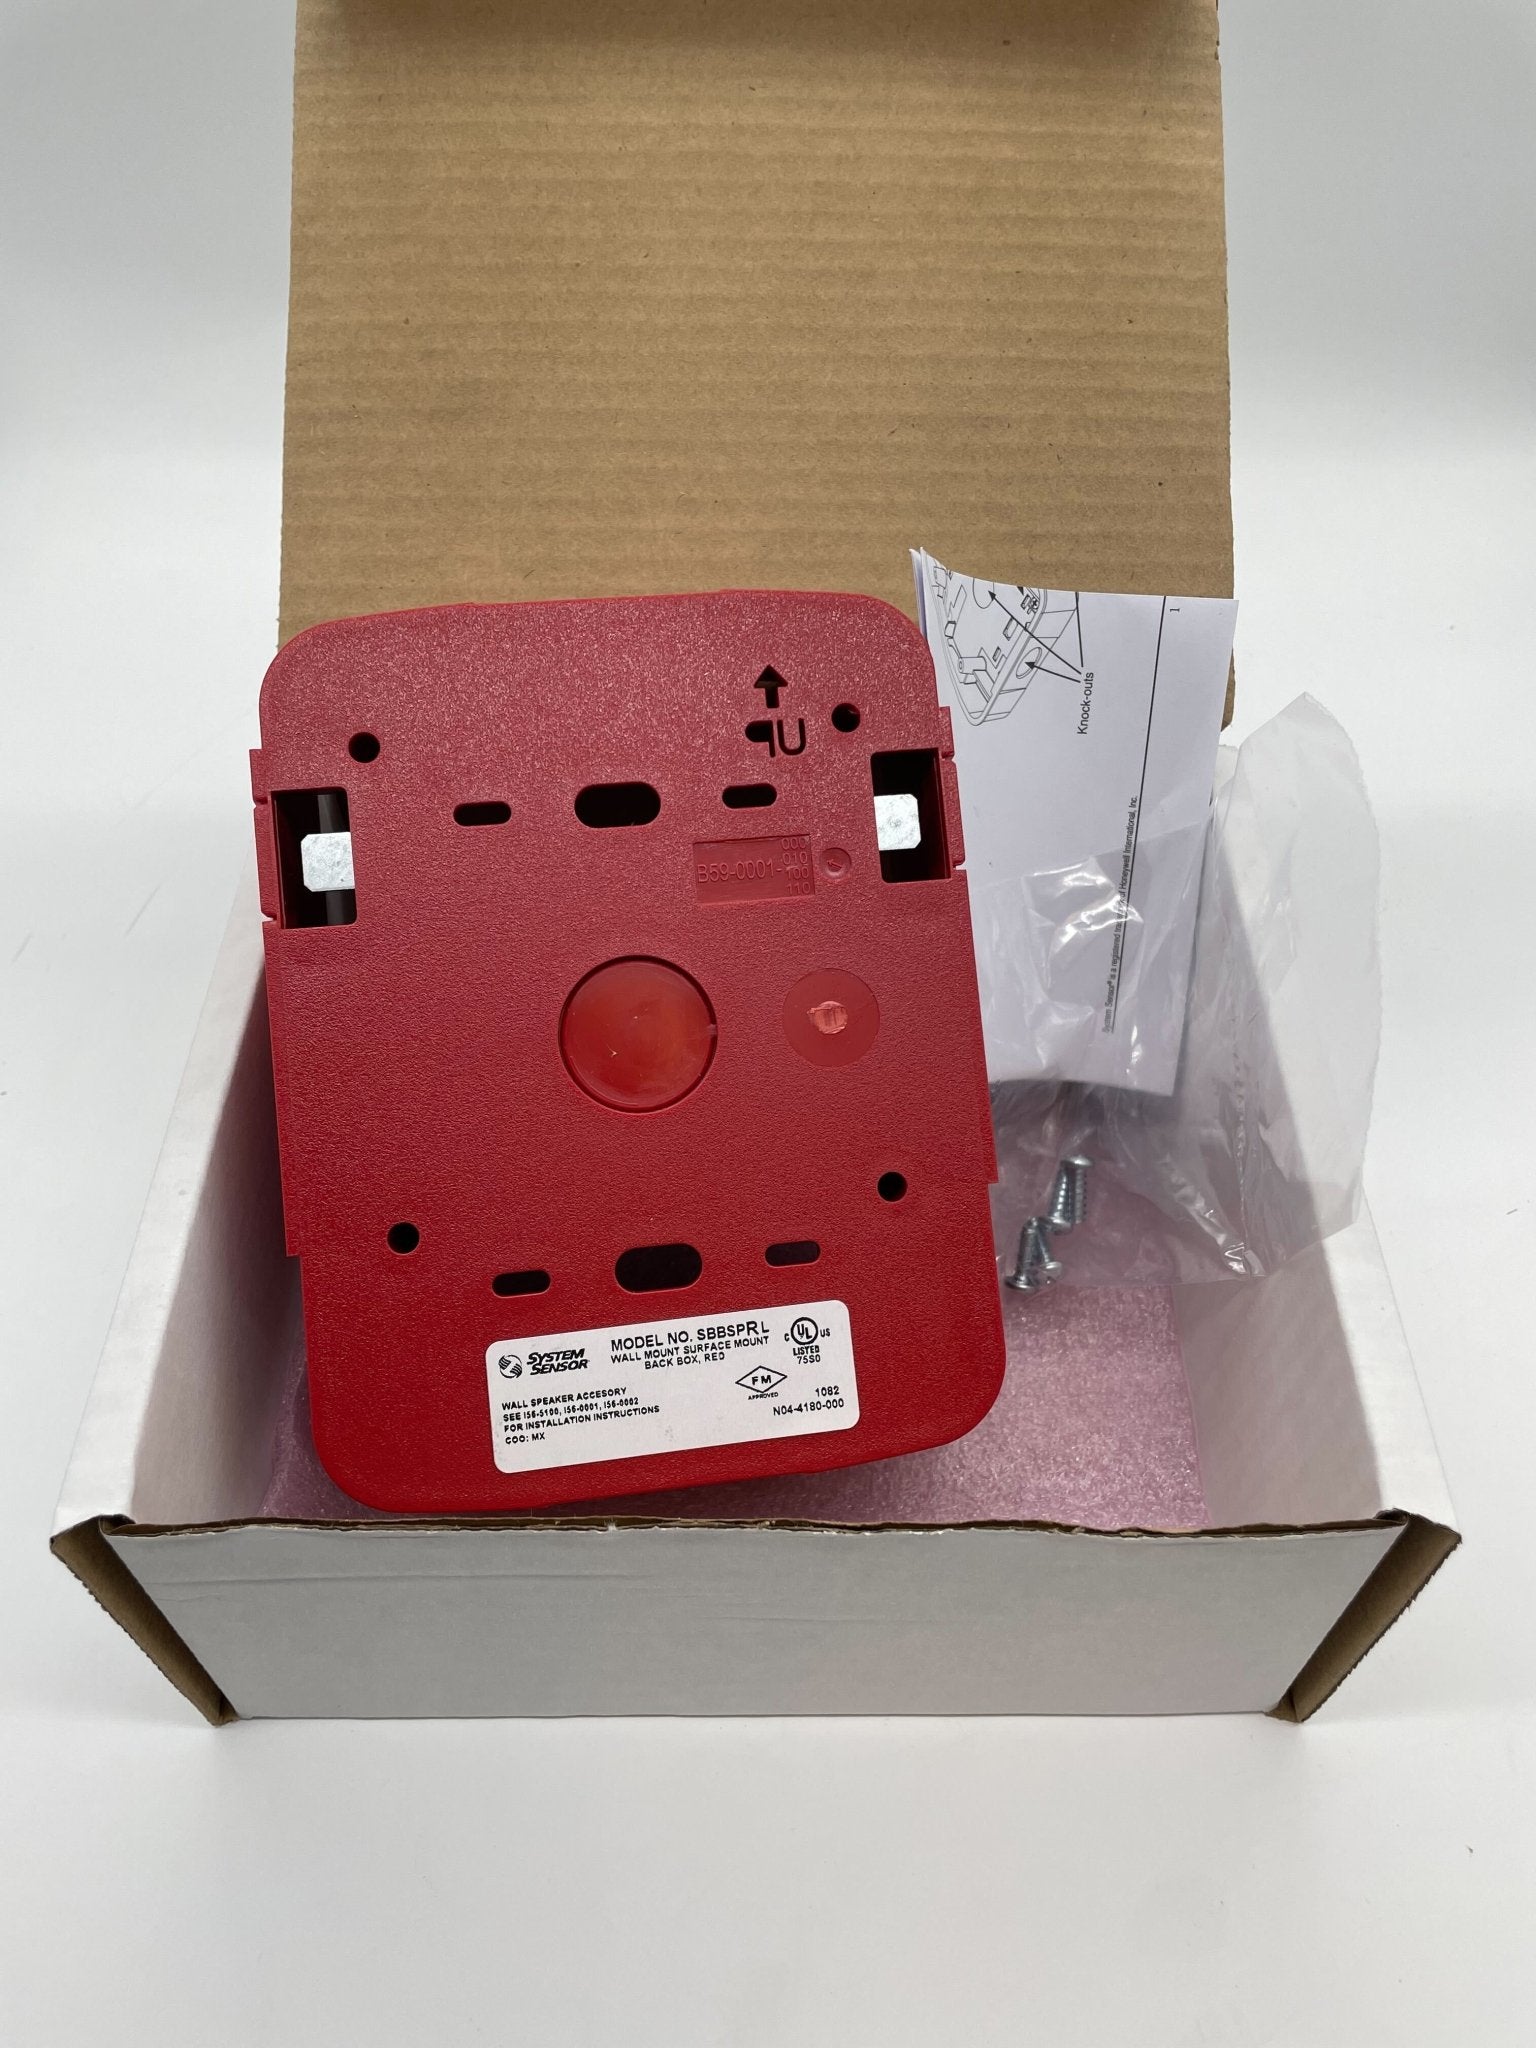 System Sensor SBBSPRL - The Fire Alarm Supplier